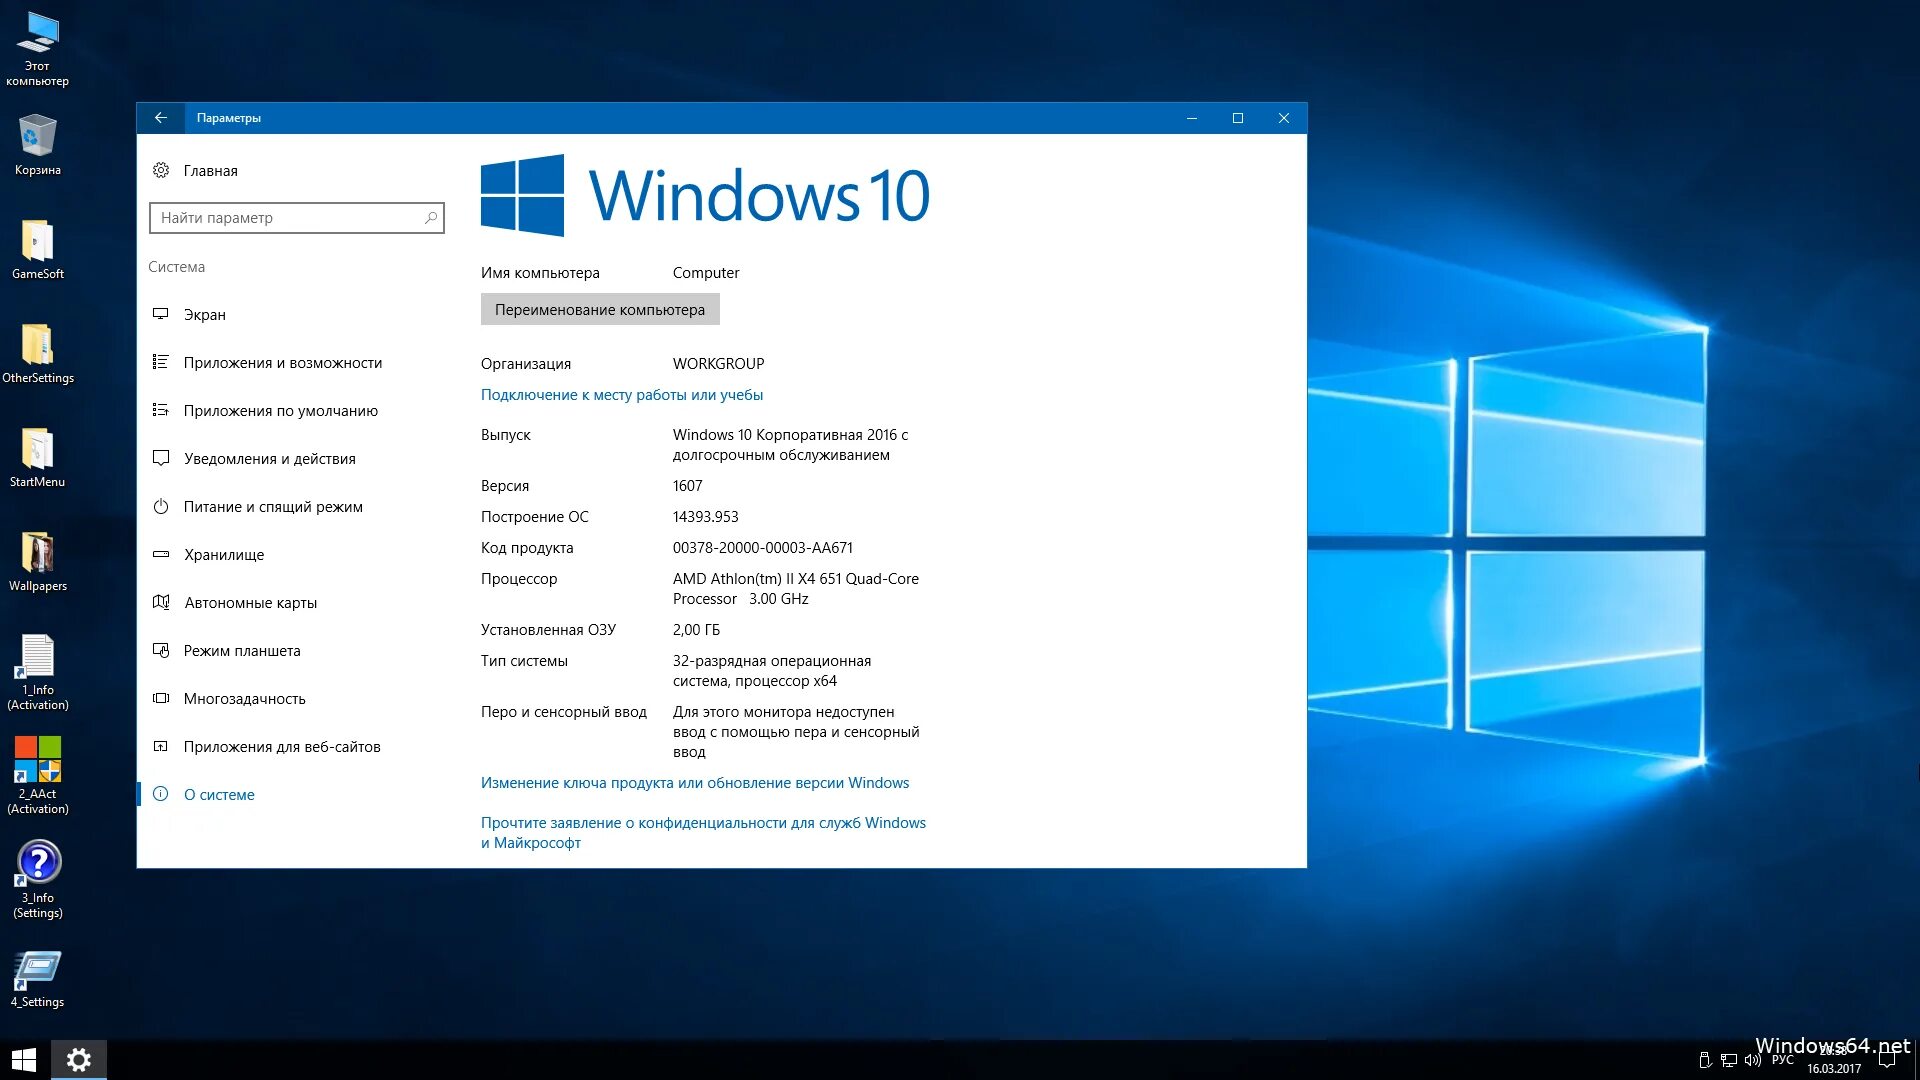 Only windows 10. ОС Microsoft Windows 10. Windows 10 Enterprise. Microsoft Windows 10 корпоративная. Windows 10 Enterprise 2016 LTSB.